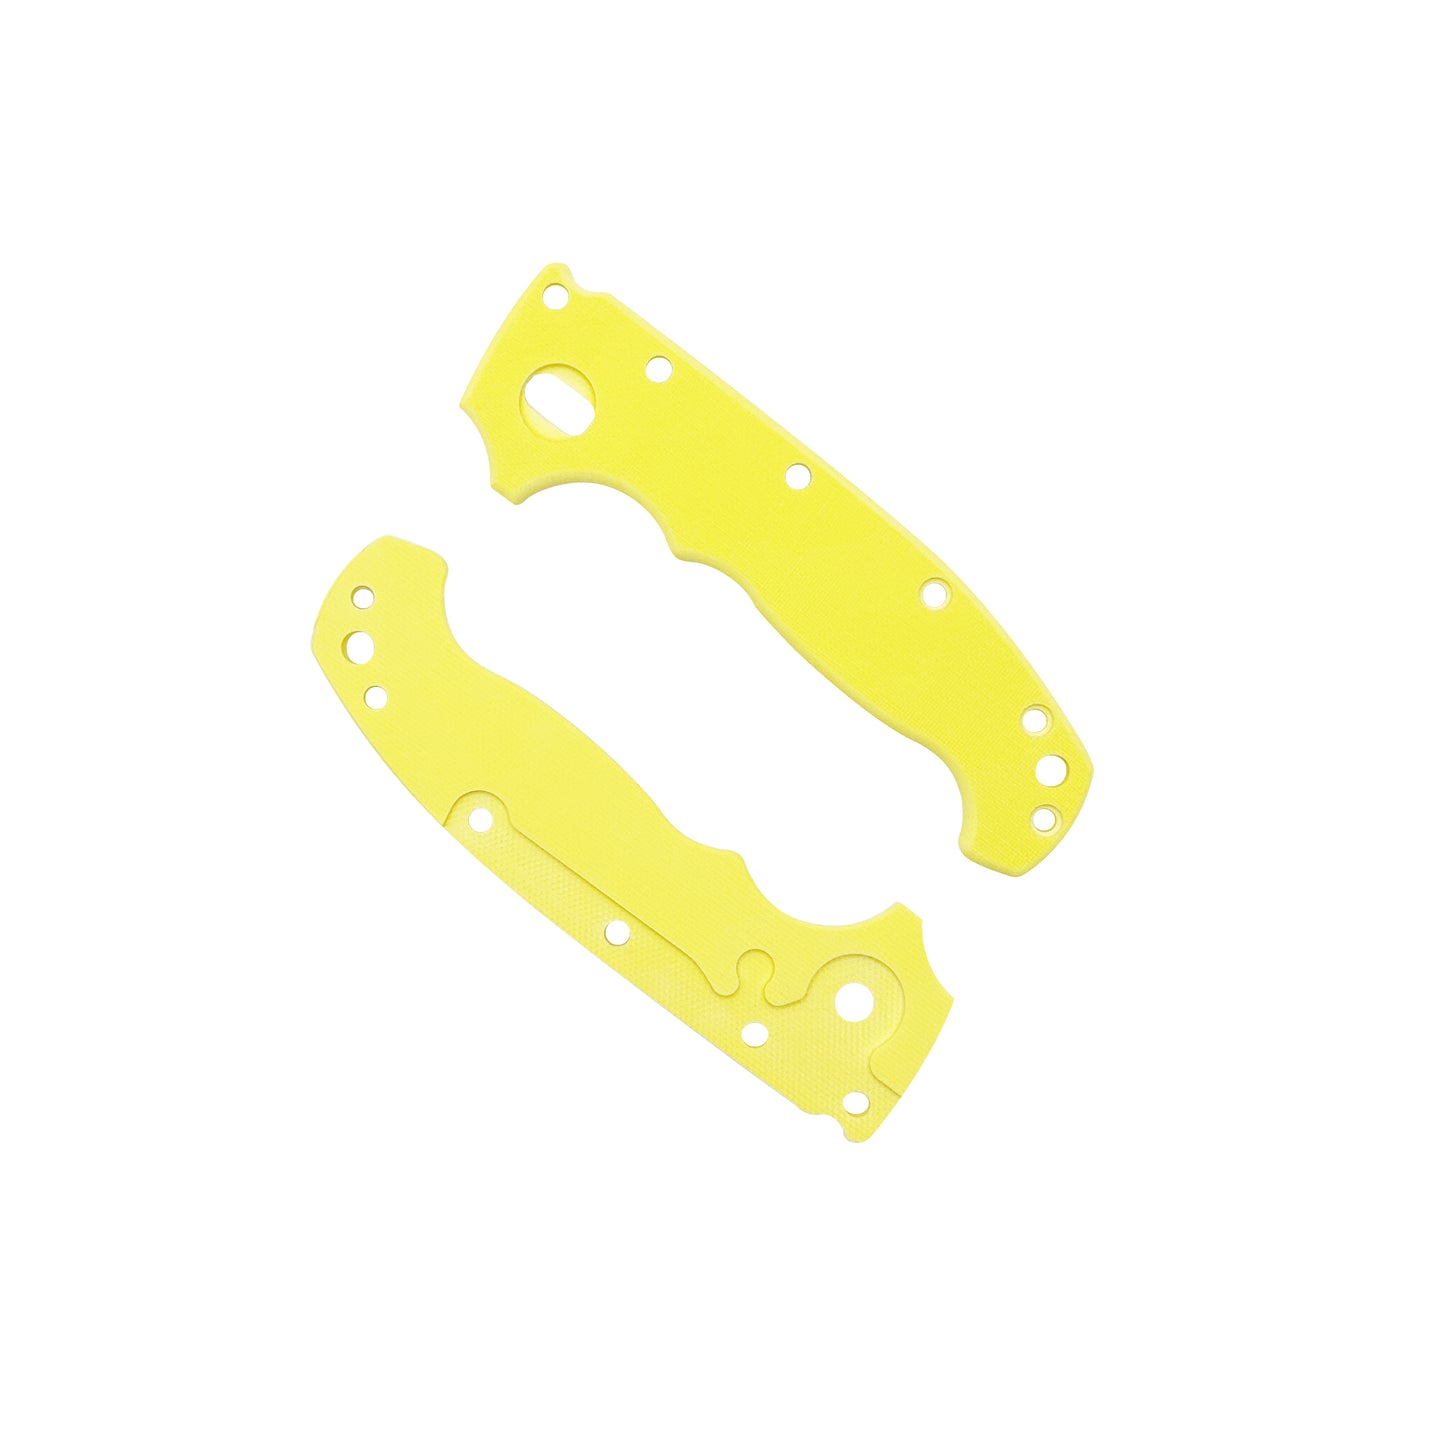 MGAD20/S Peel Ply G10 Scales - Yellow